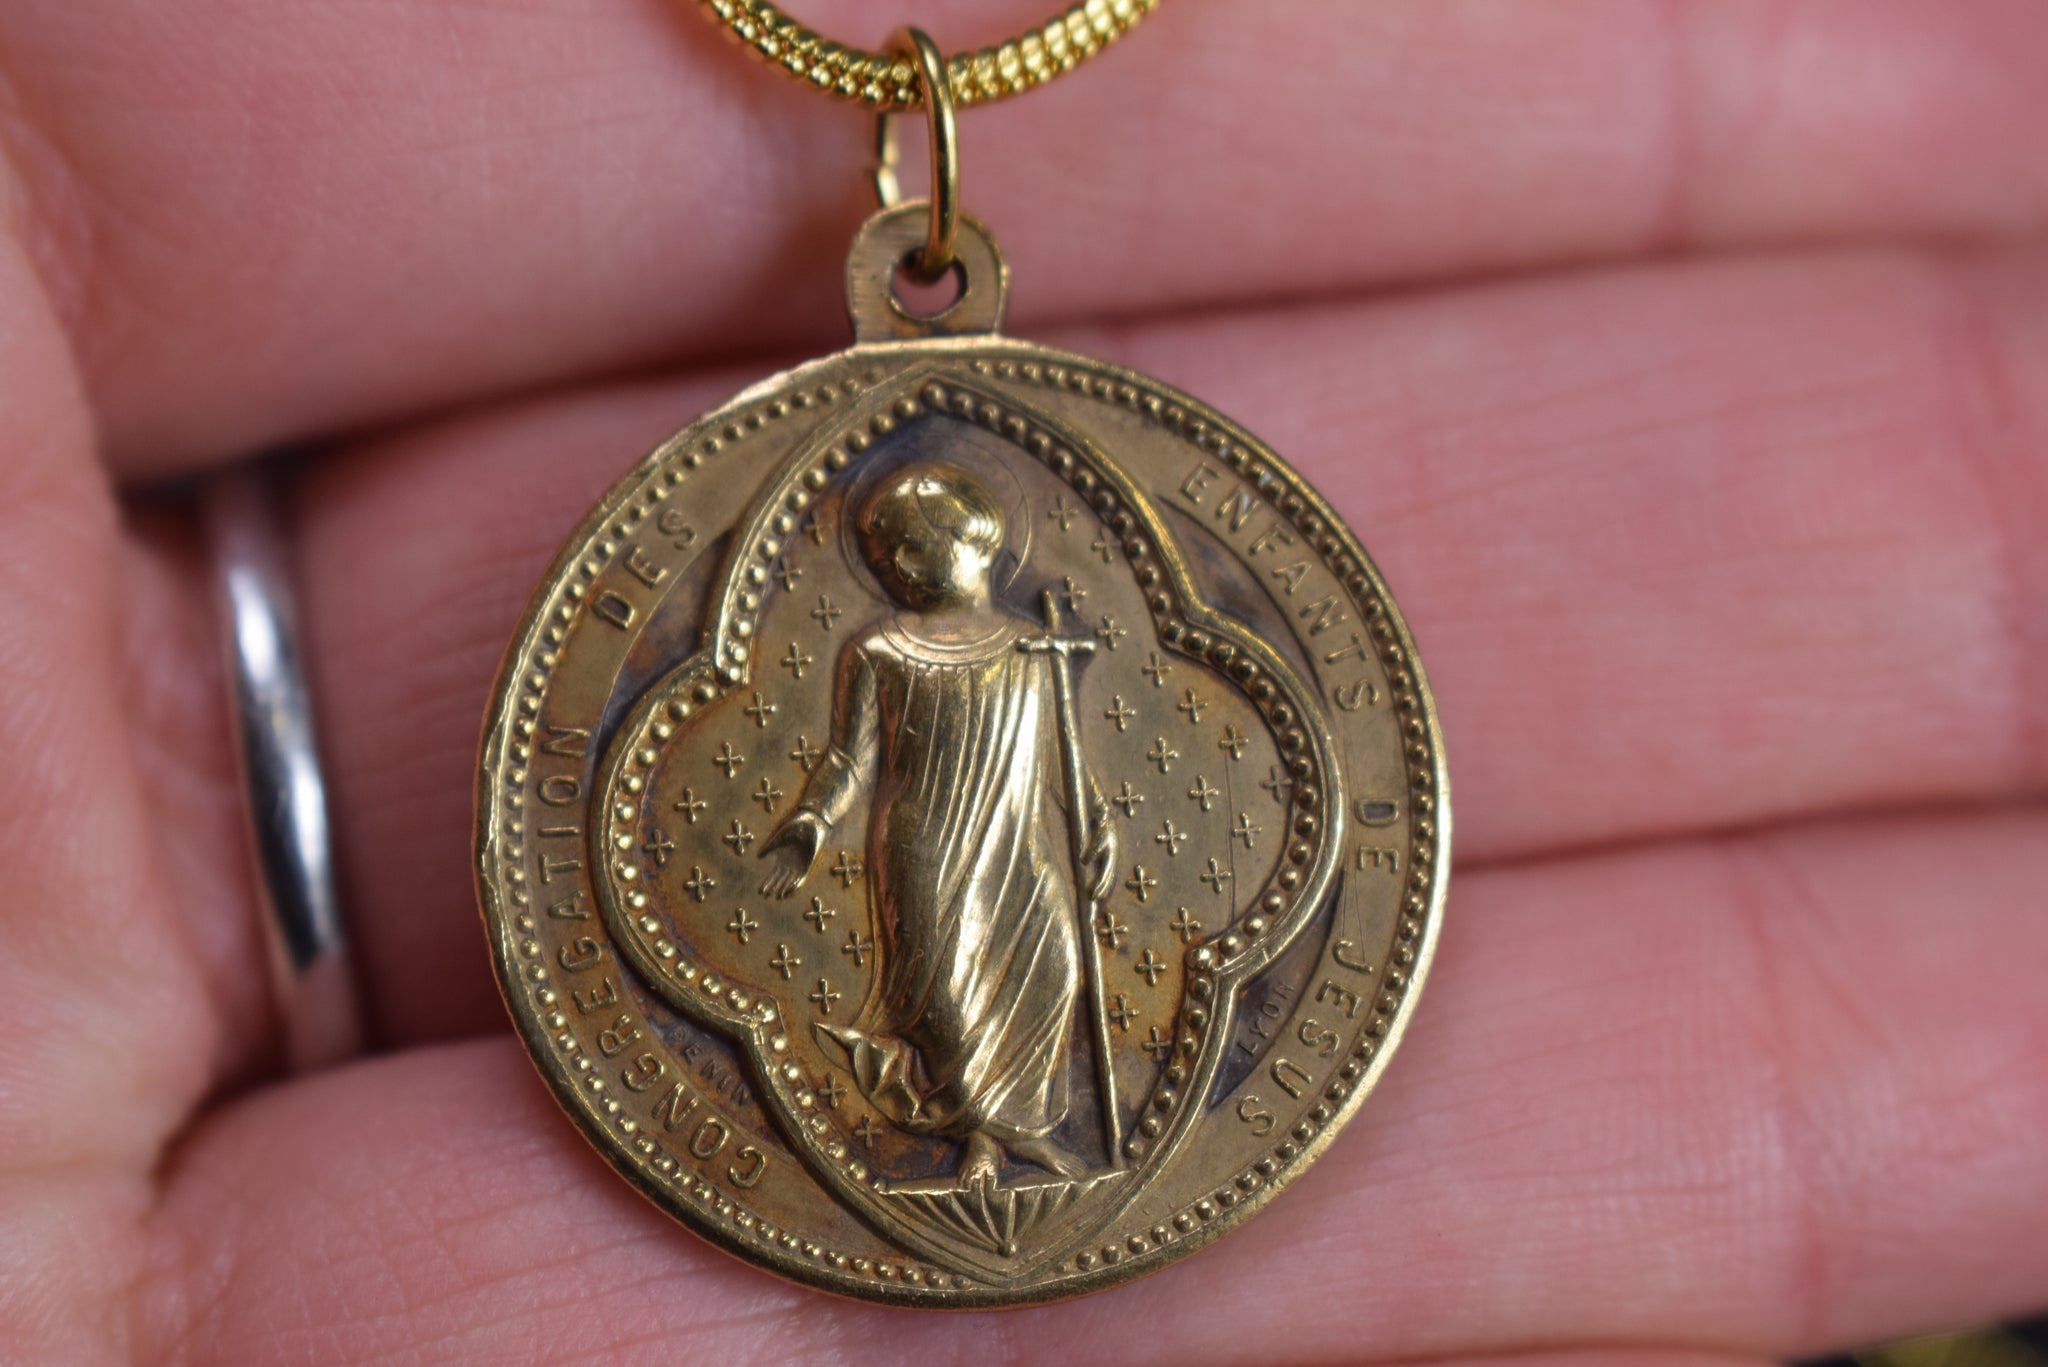 Jesus Child Medal by Penin